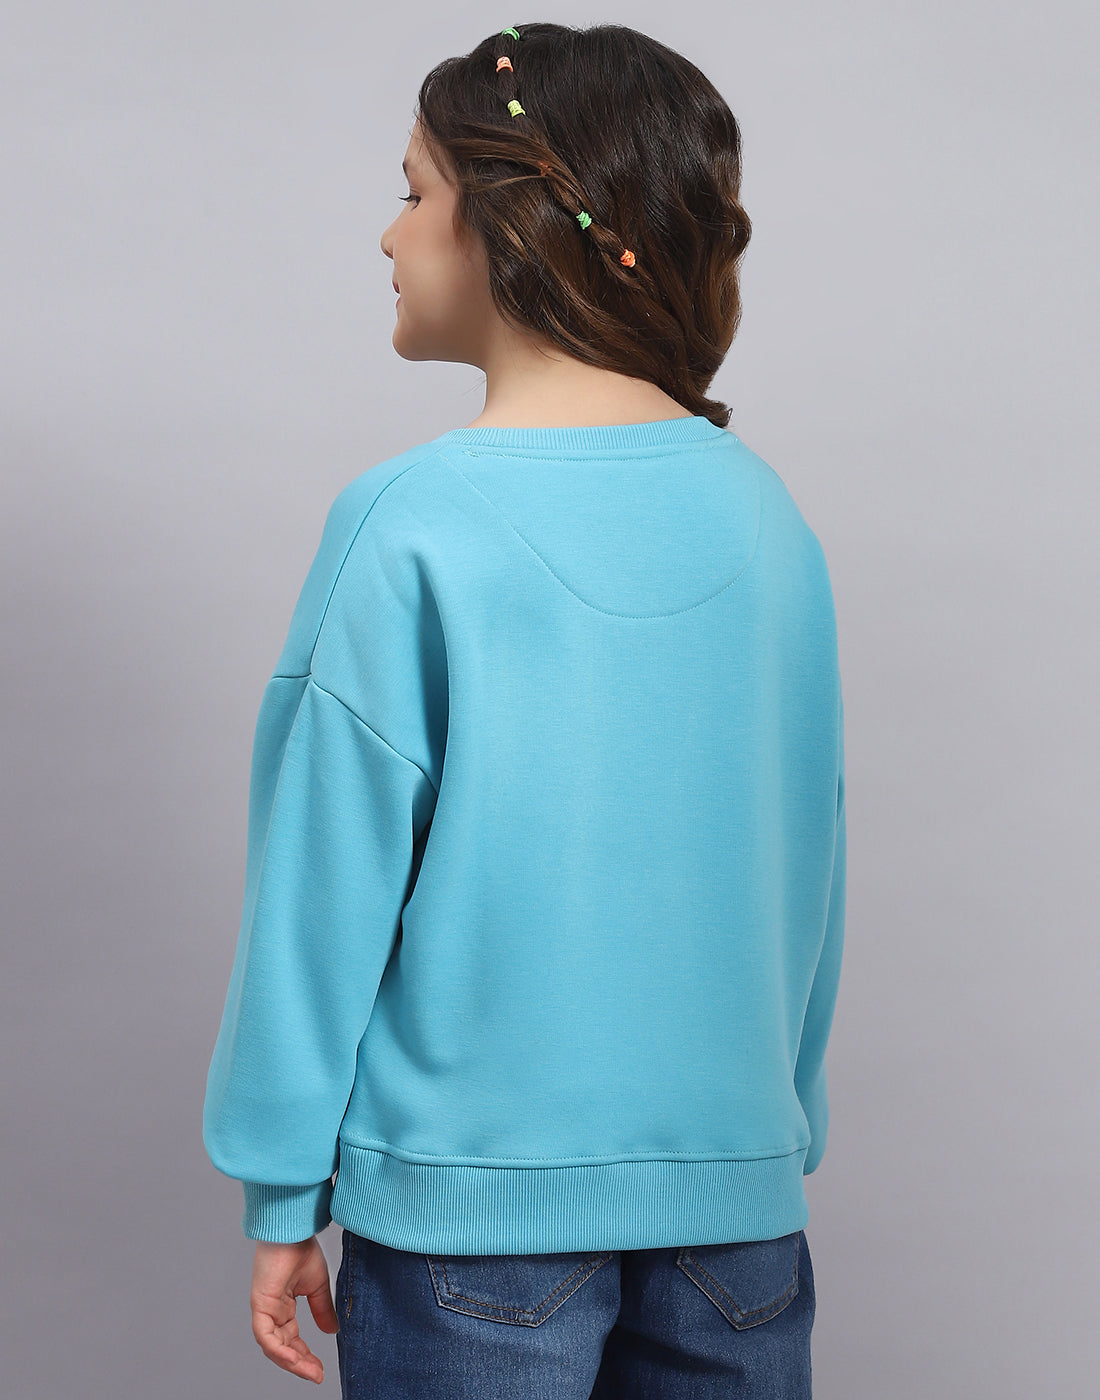 Girls Turquoise Blue Printed Round Neck Full Sleeve Sweatshirt